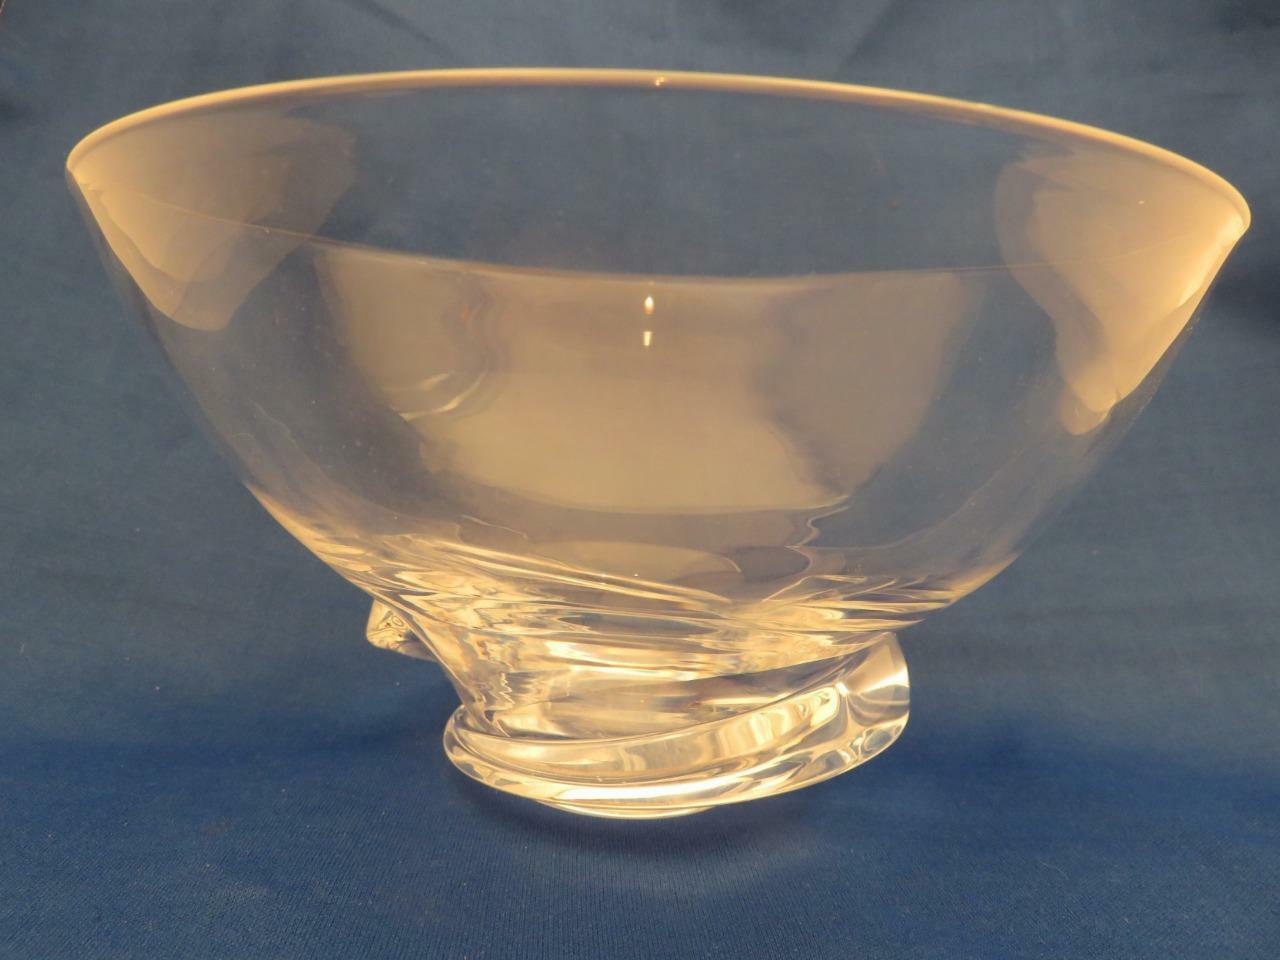 Steuben Signed Spiral Bowl #8060 Designed By Donald Pollard In 1954